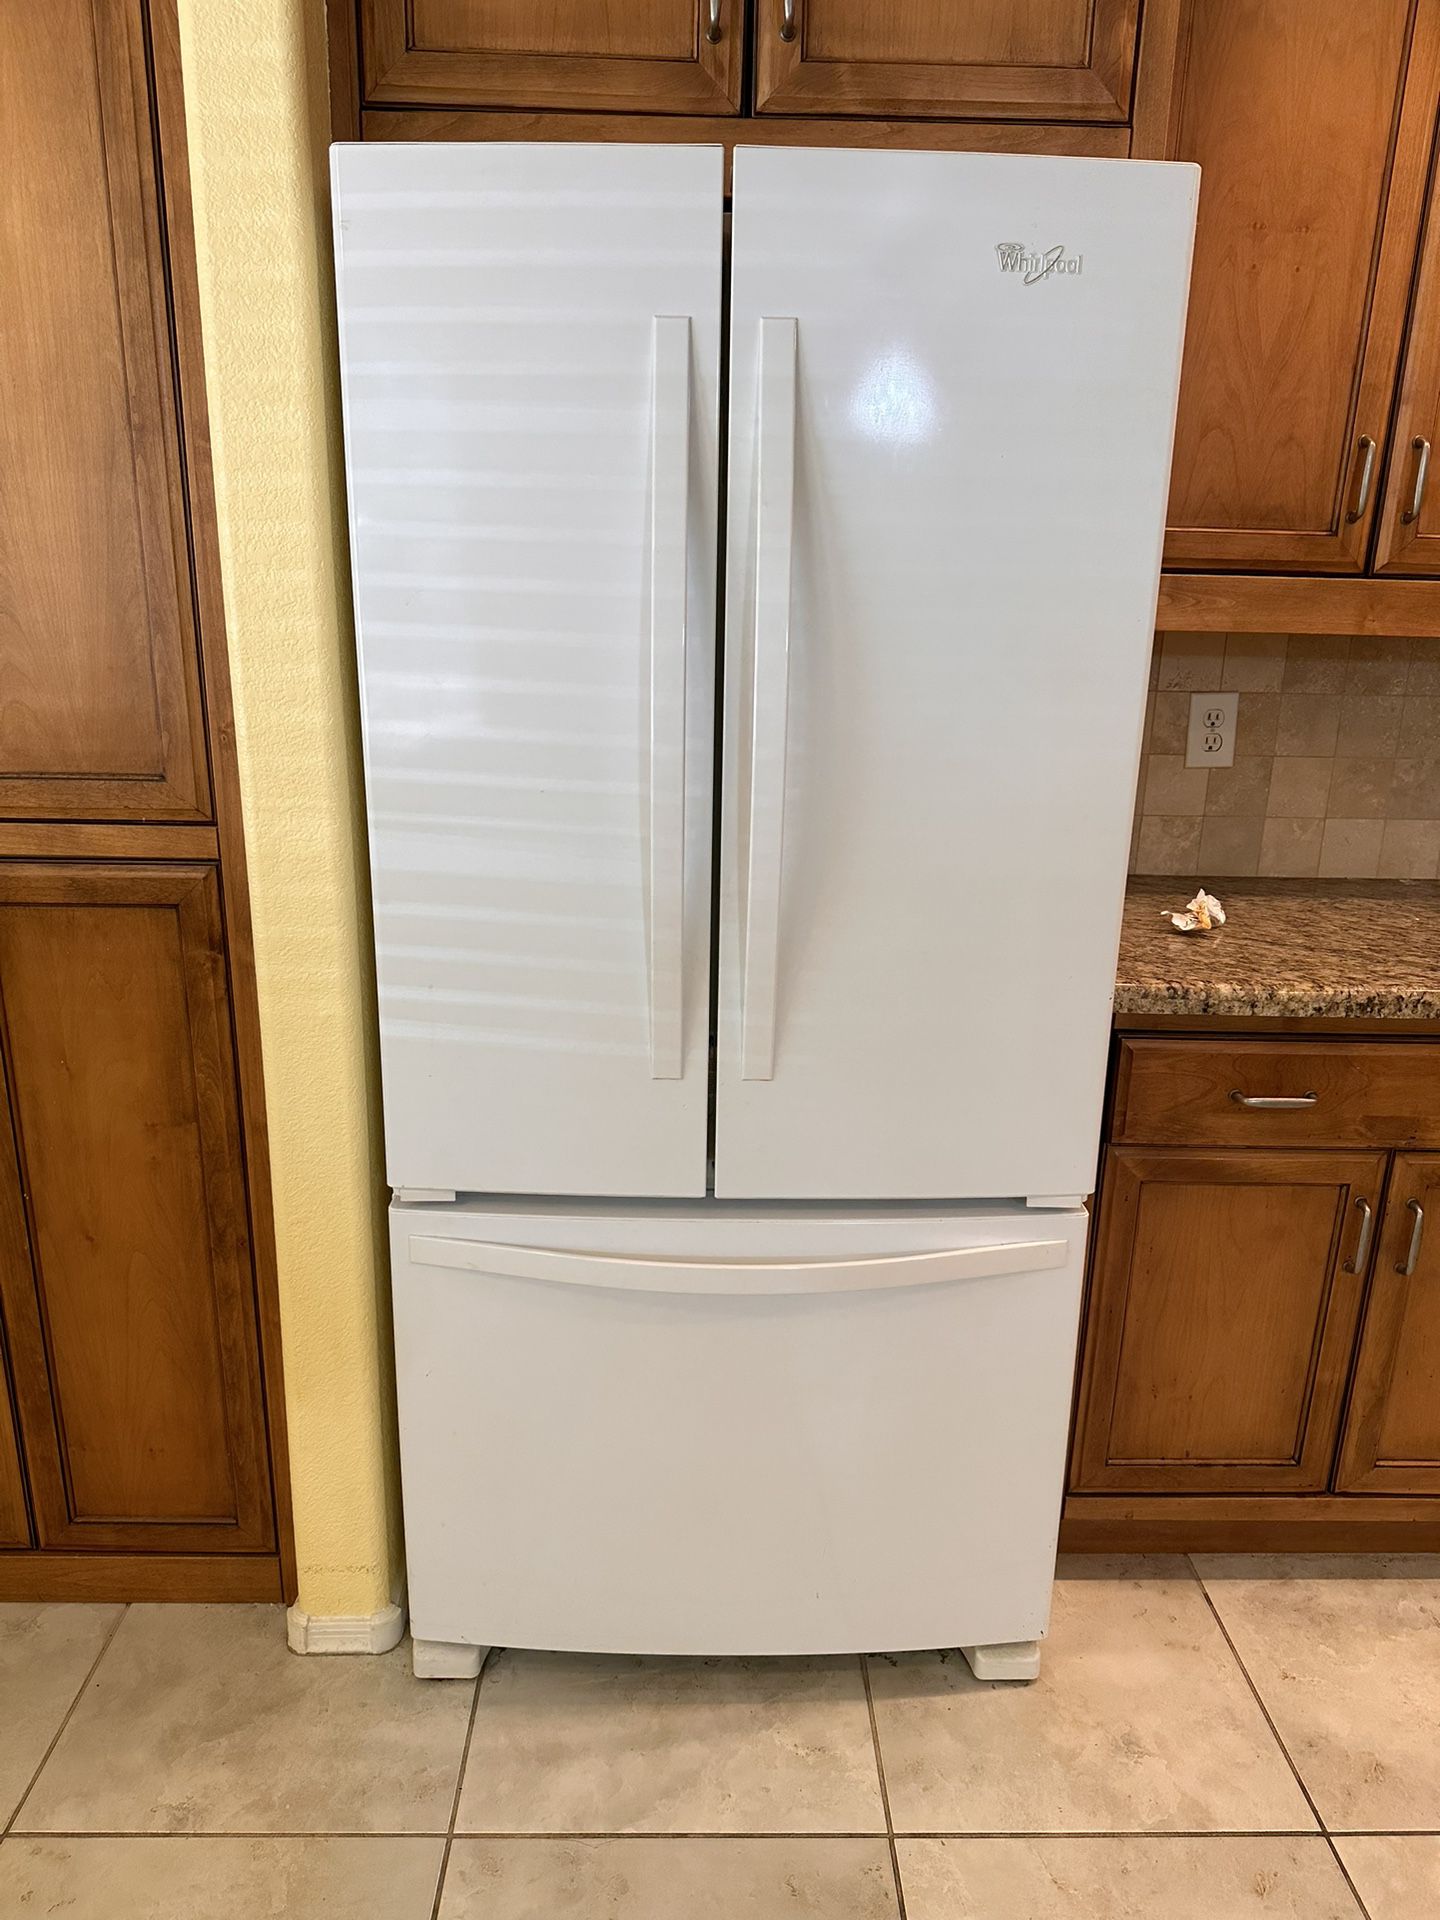 Kitchen appliances: Whirlpool refrigerator, Bosch dishwasher, Whirlpool stove, KitchenAid microwave.